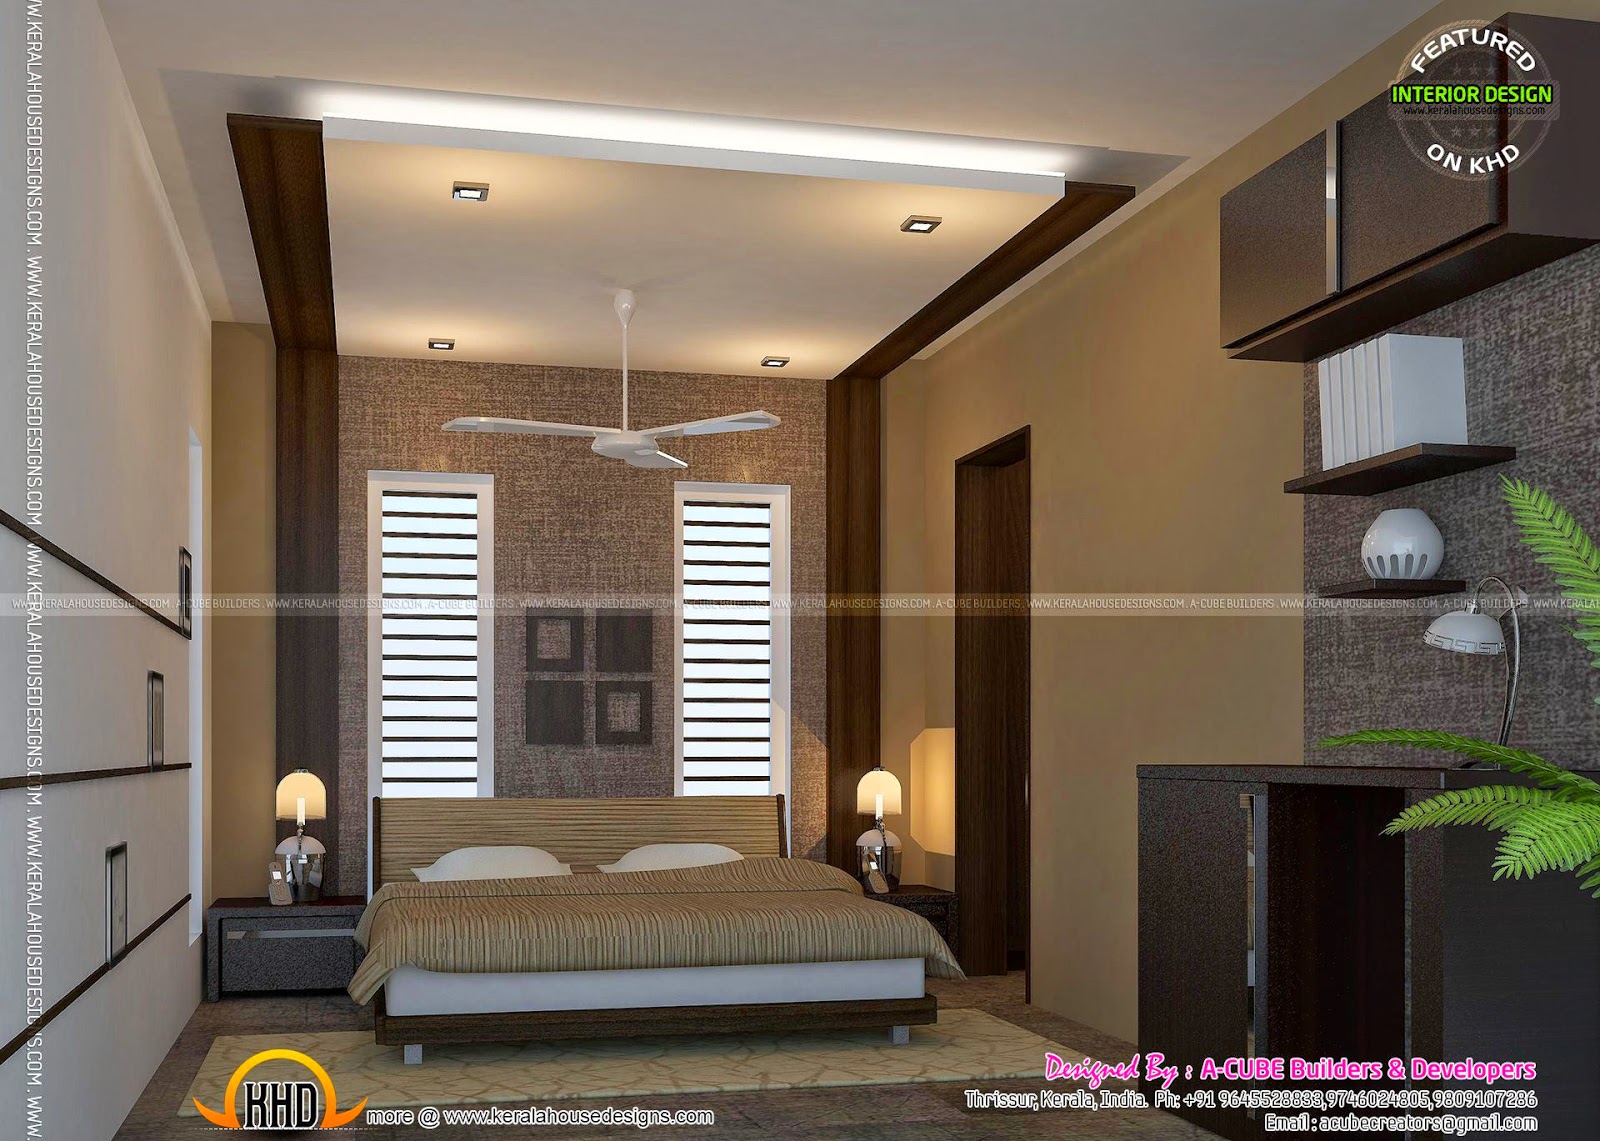 Kerala interior design ideas Kerala home design and